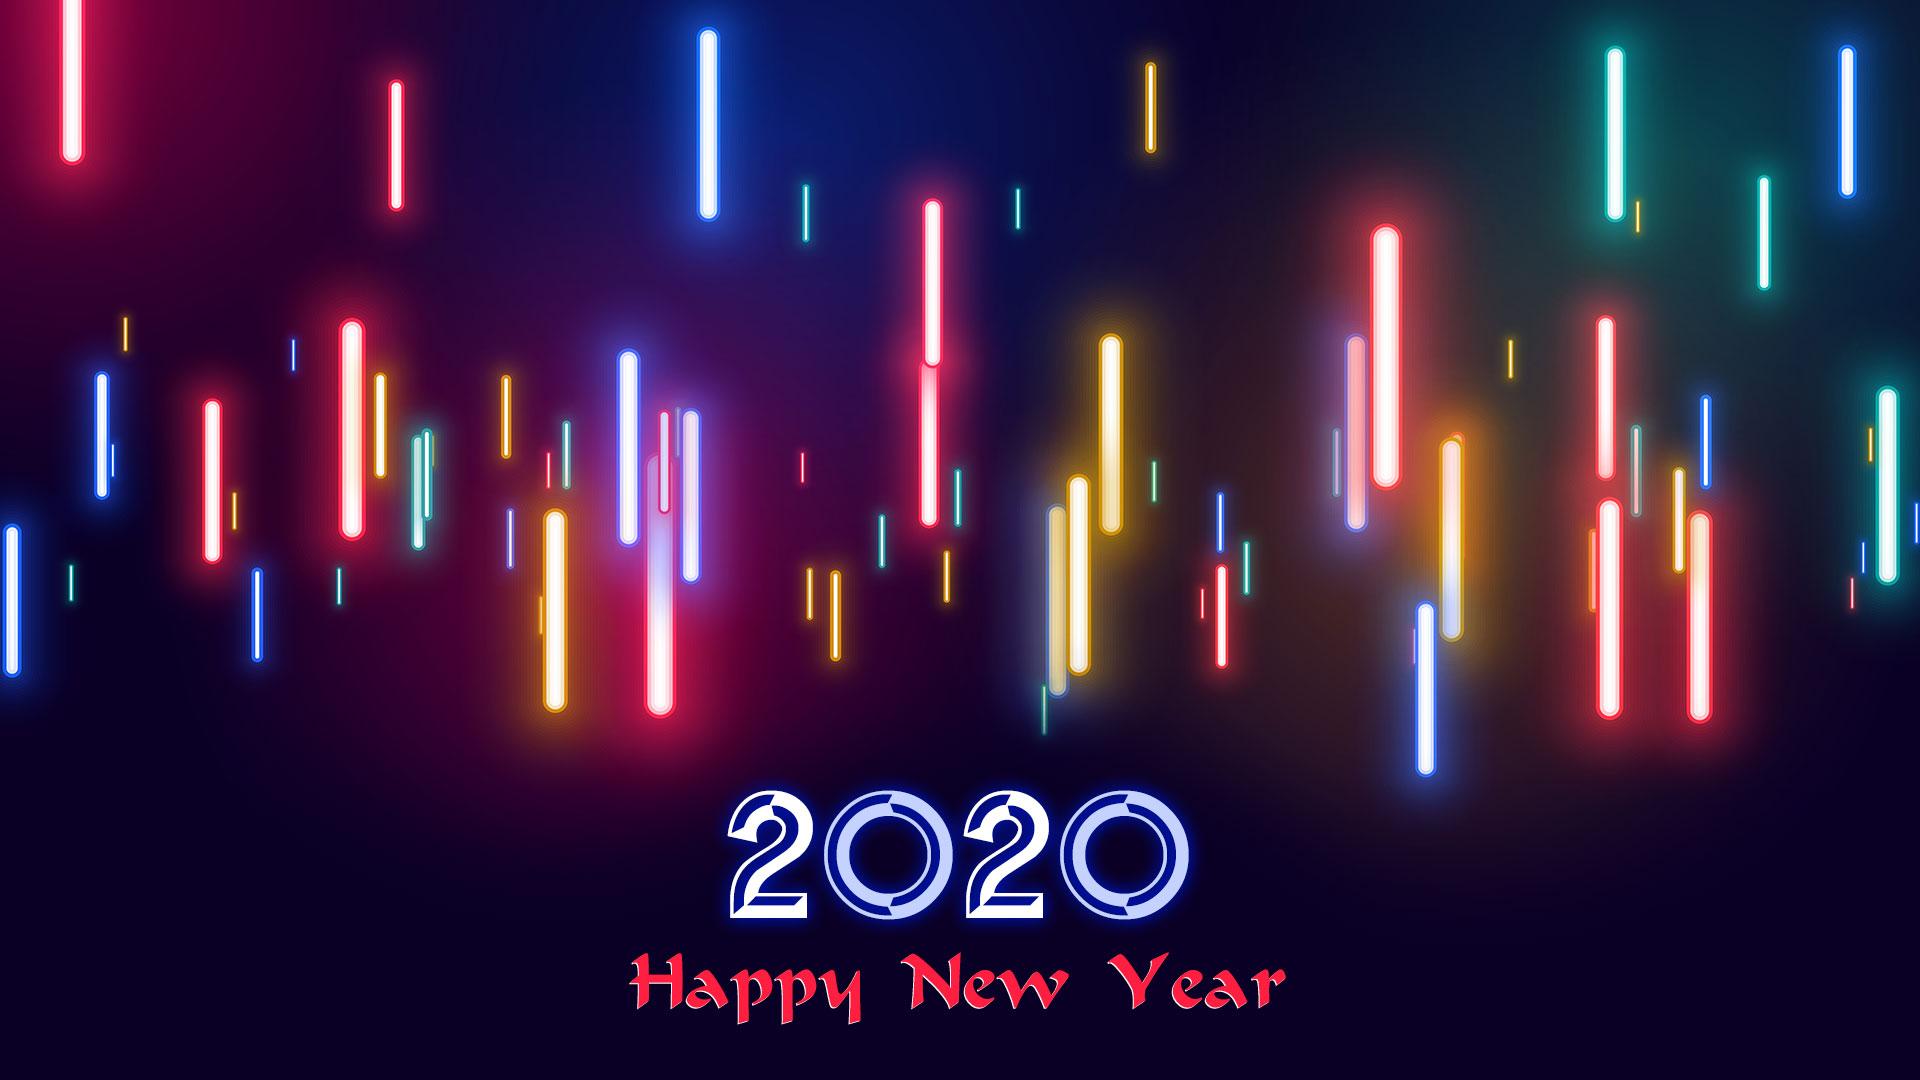 HD Wallpaper 2020: HD Image 2020